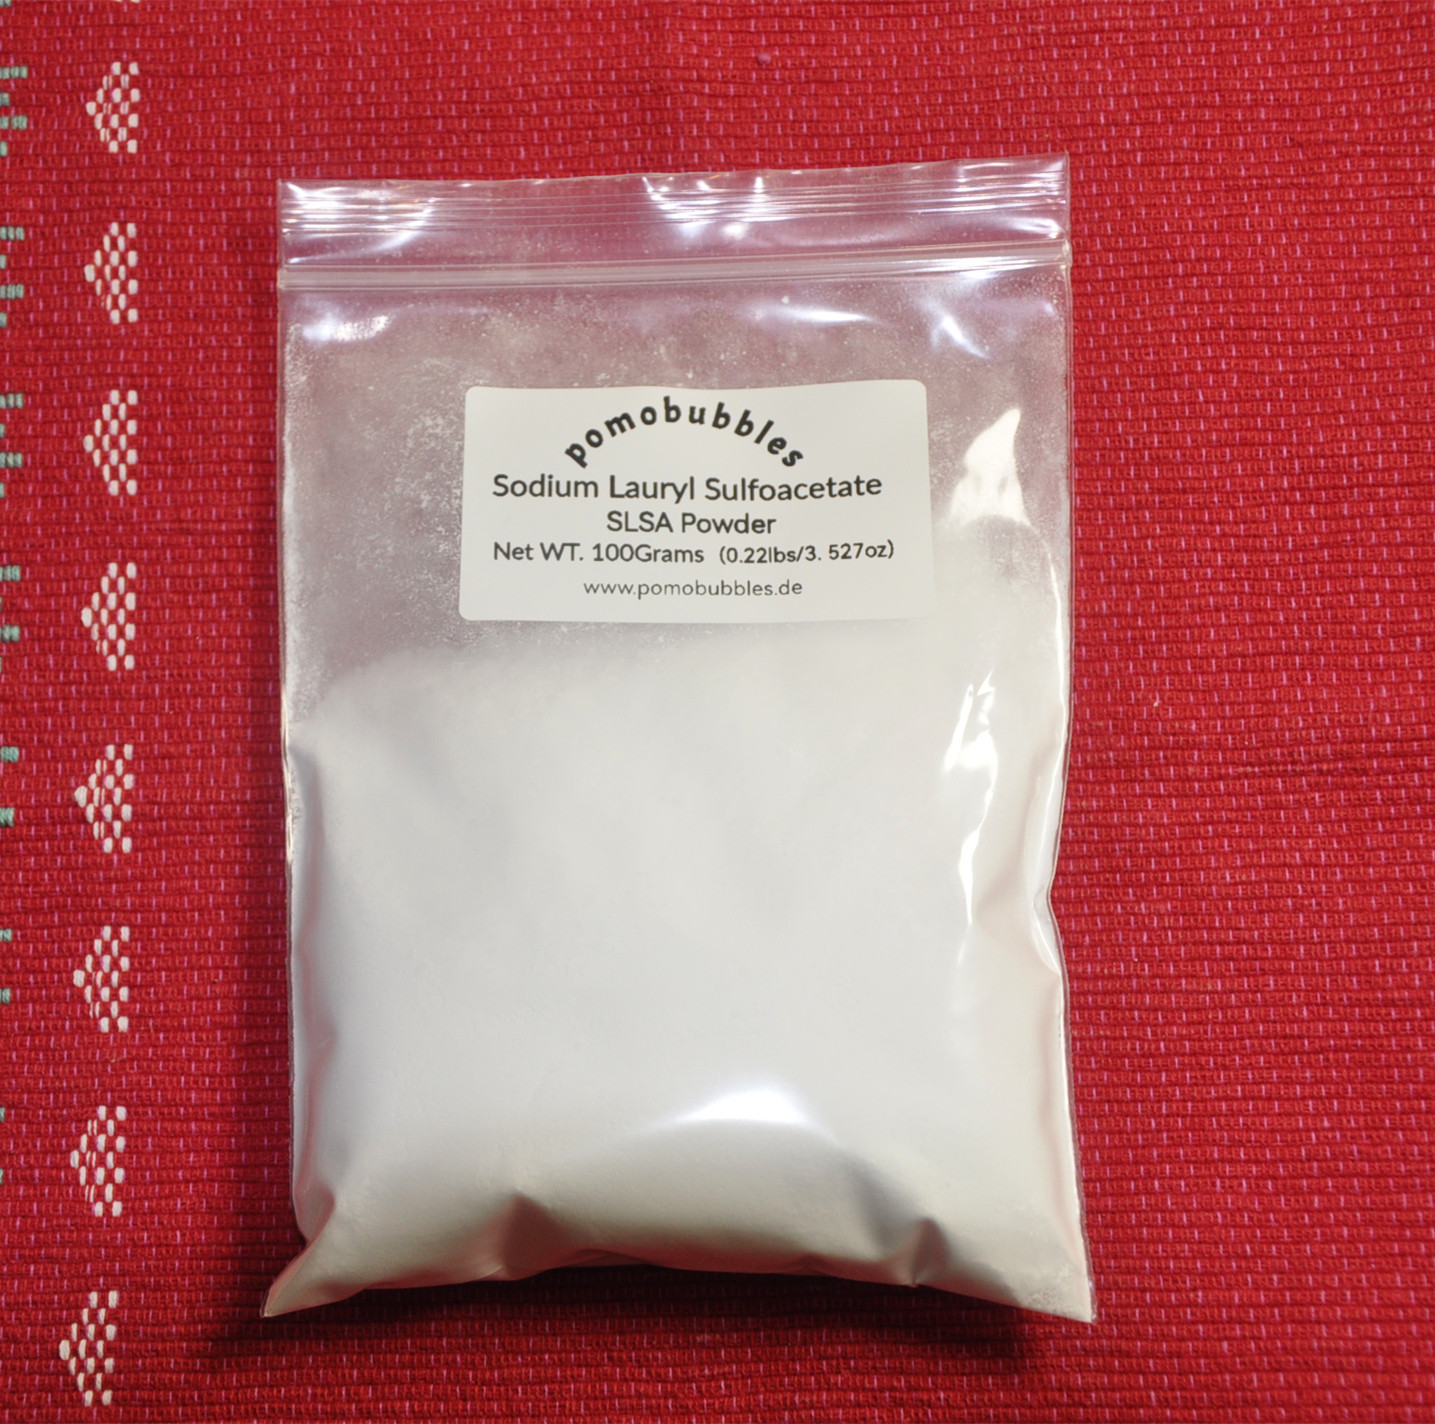 SLSA - Sodium Lauryl Sulphoacetate - Surfactant